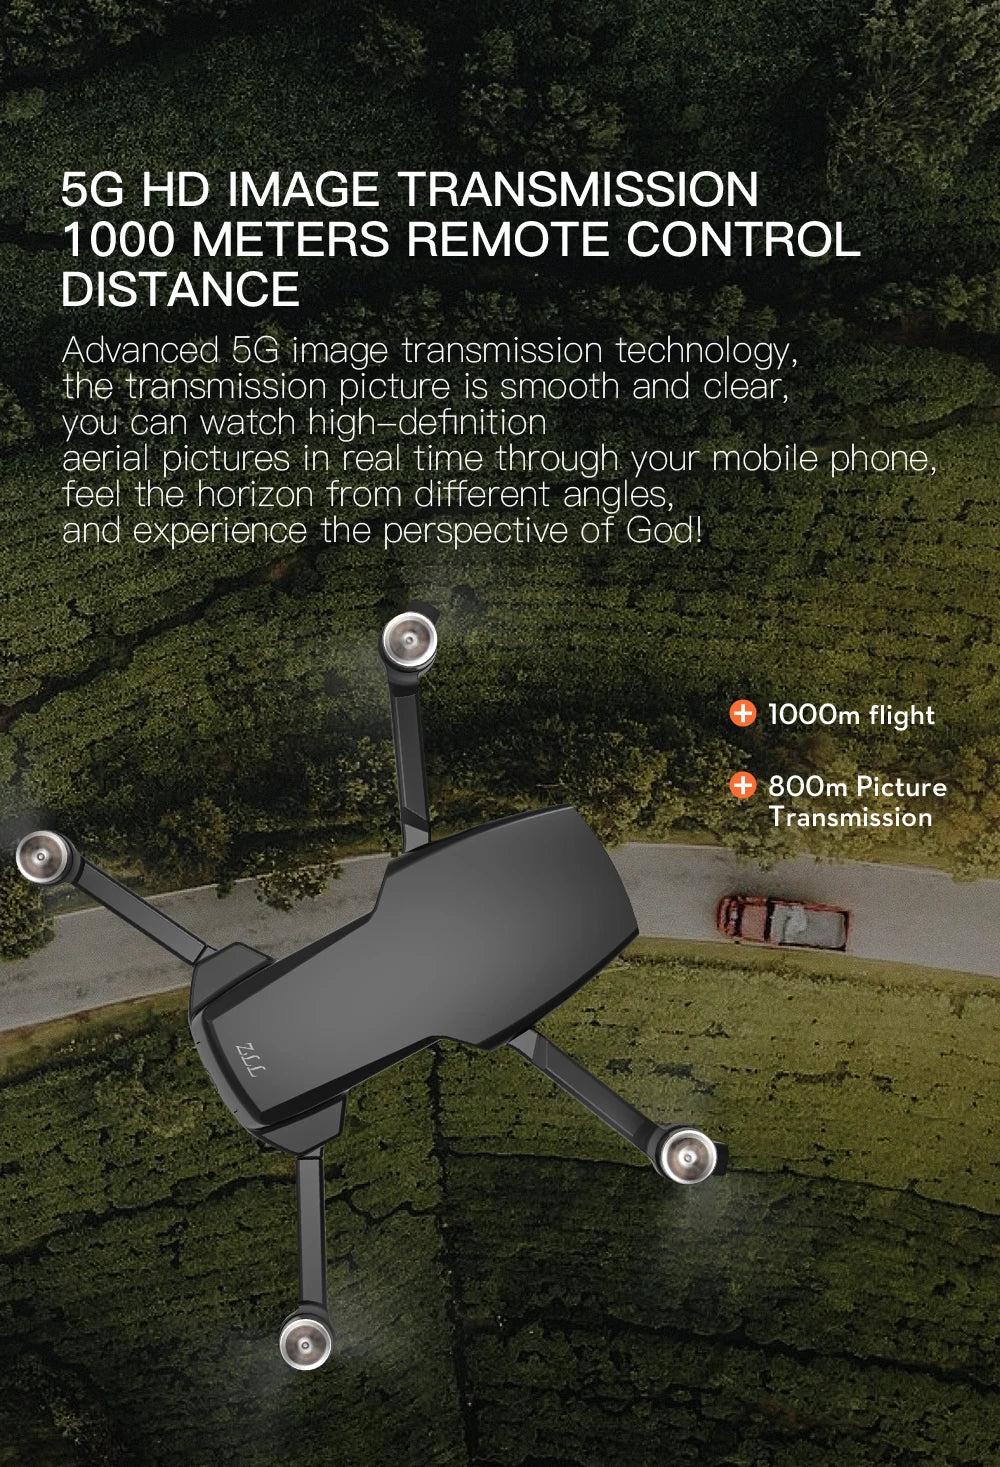 G108 Pro MAx Drone, 5G HD IMAGE TRANSMISSION 1000 METERS REMOTE CONTRO